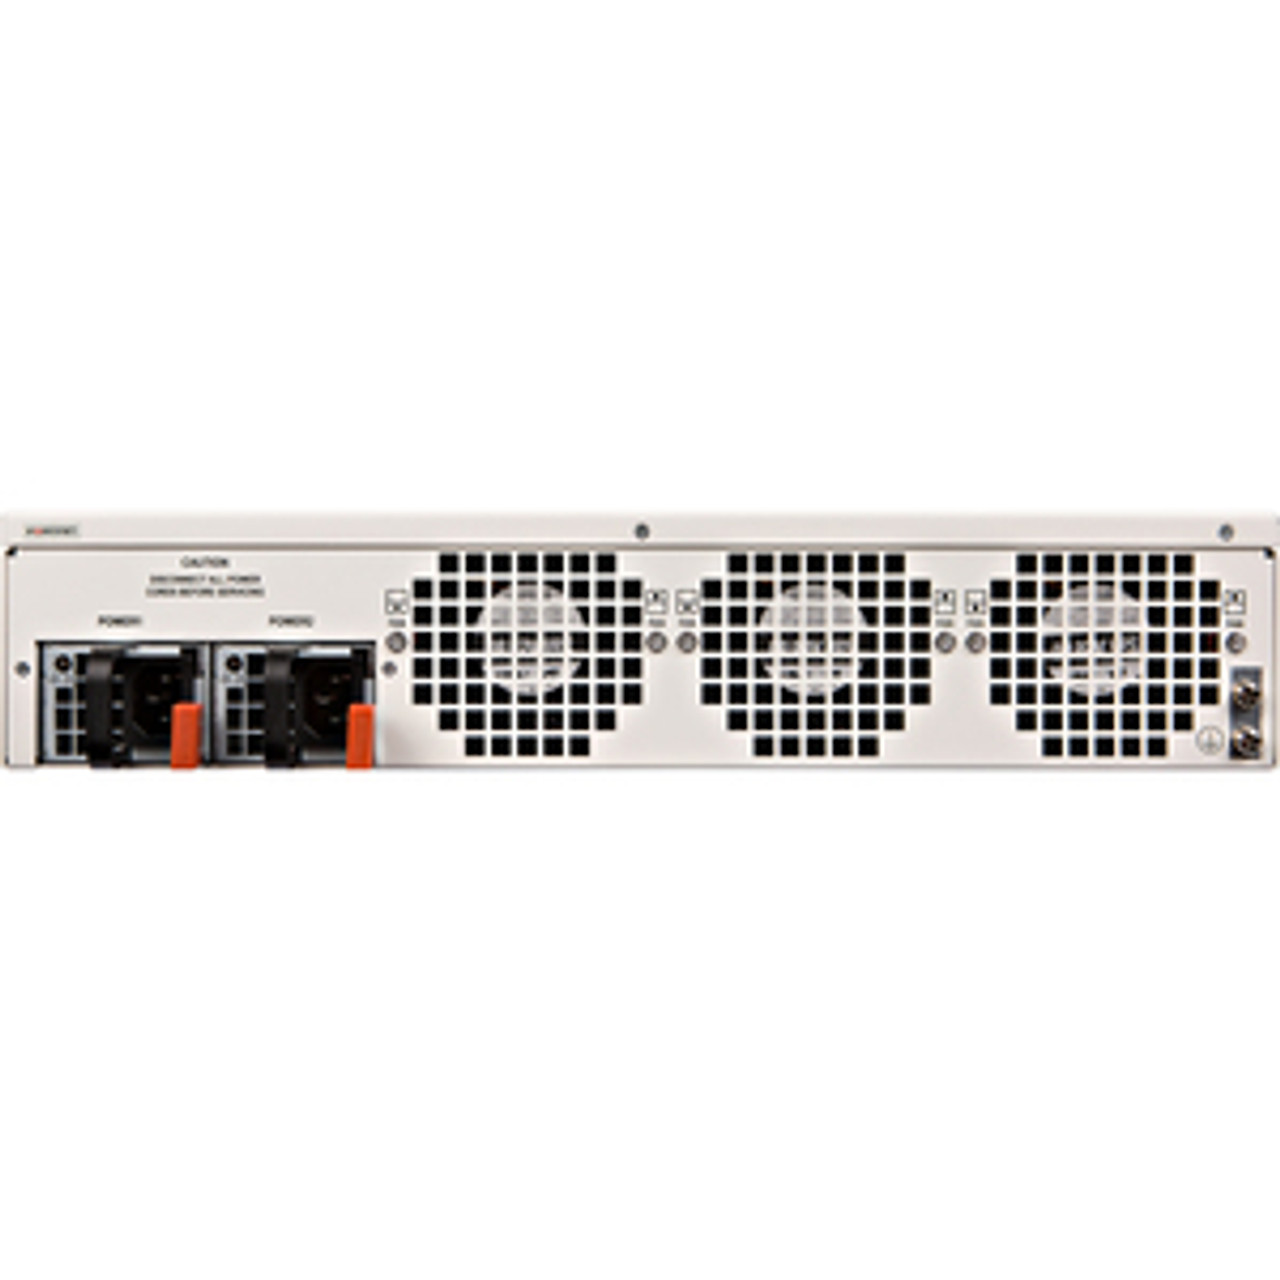 Fortinet FortiGate 3100D Network Security/Firewall Appliance - 1000Base-X, 1000Base-T, 10GBase-X - 10 Gigabit Ethernet - AES (256-bit), SHA-1 - 32 Total Expansion Slots - 2U - Rack-mountable